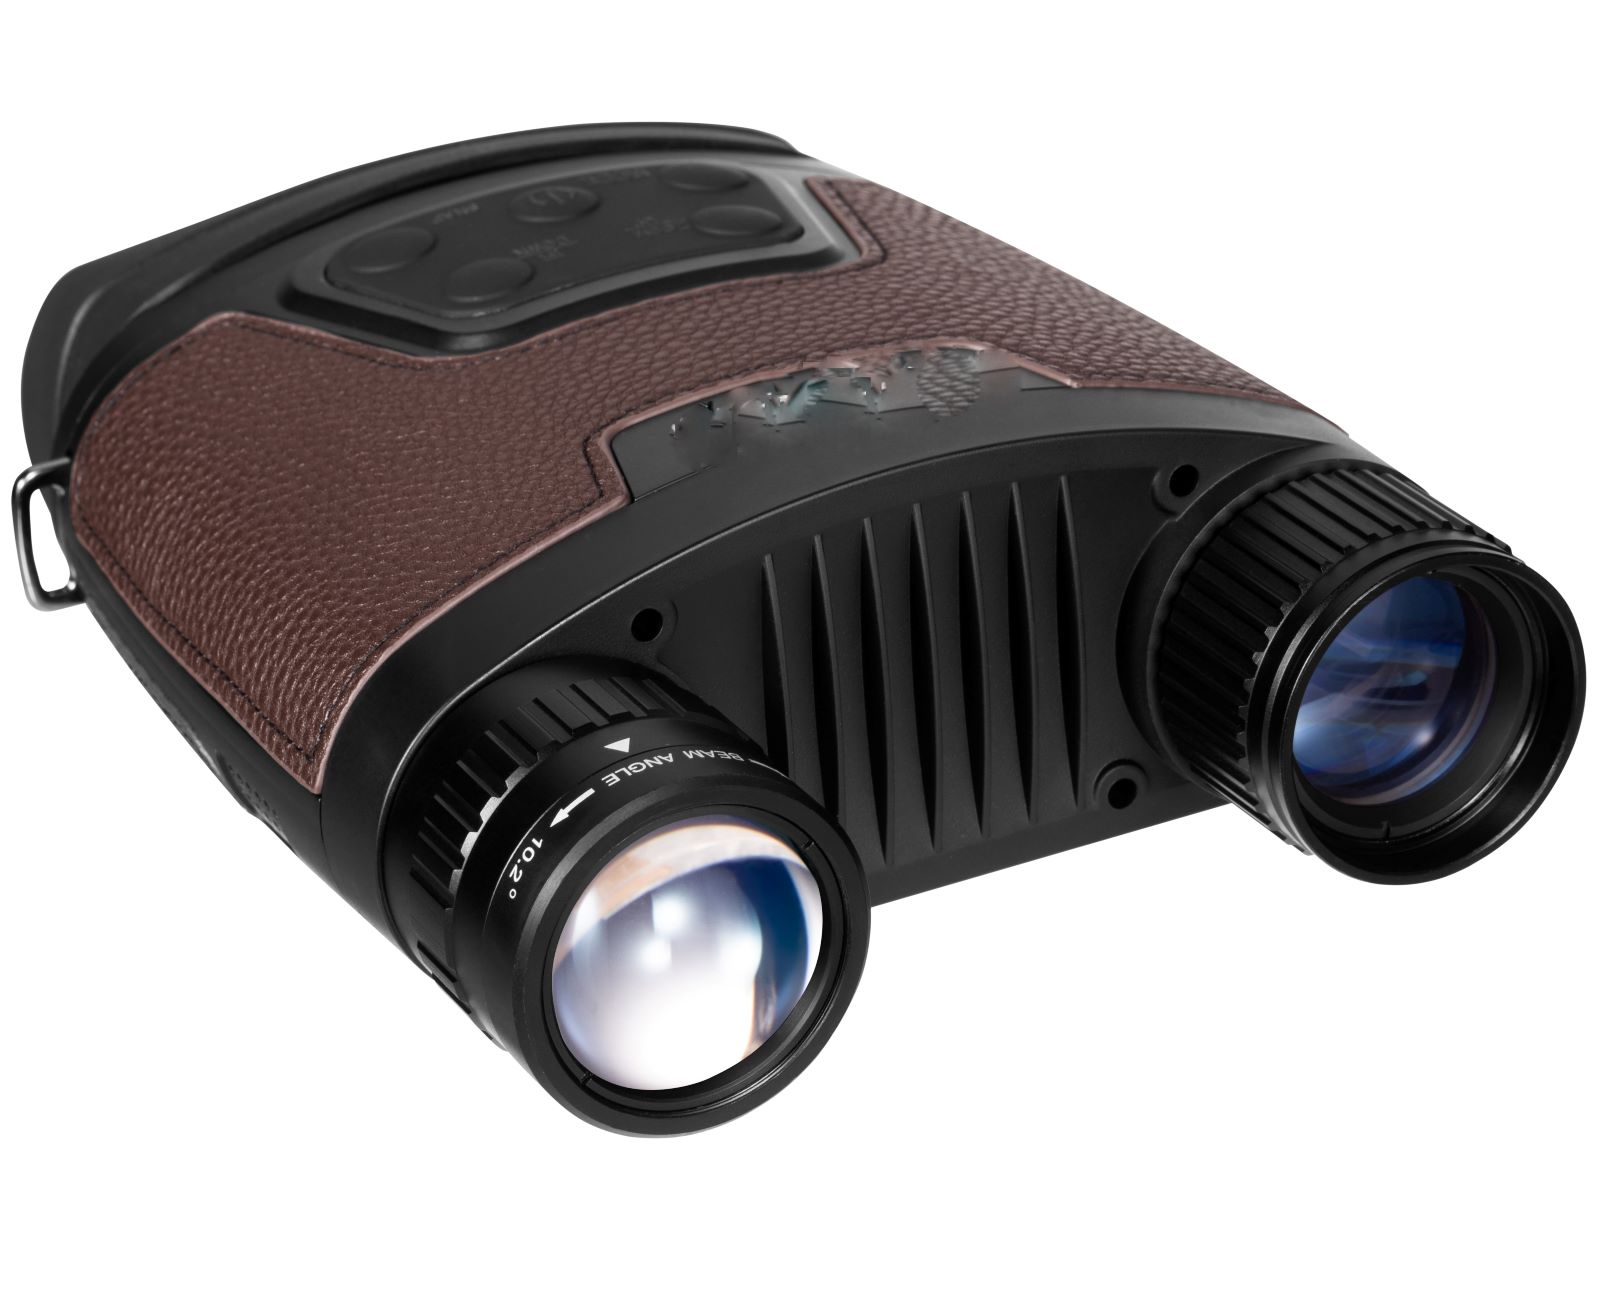 380m illuminating distance, 2X zoom-in telecentric lens, 31mm diameter 3.5X objective lens, 1920X1080 sensor, 640X360 built-in TFT LCD, active infrared laser binocular night vision camera 